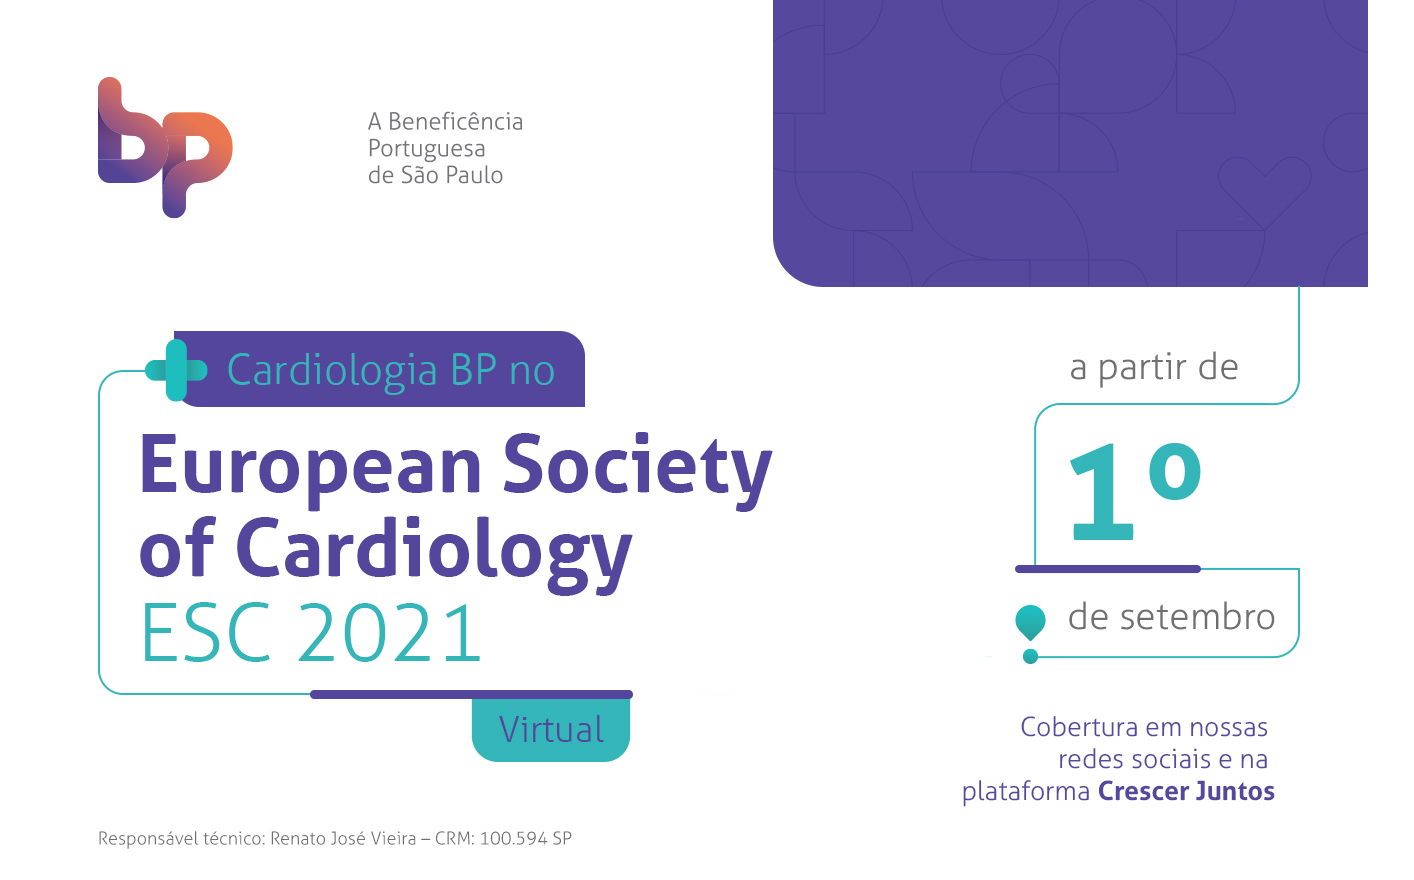 European Society of Cardiology - ESC 2021